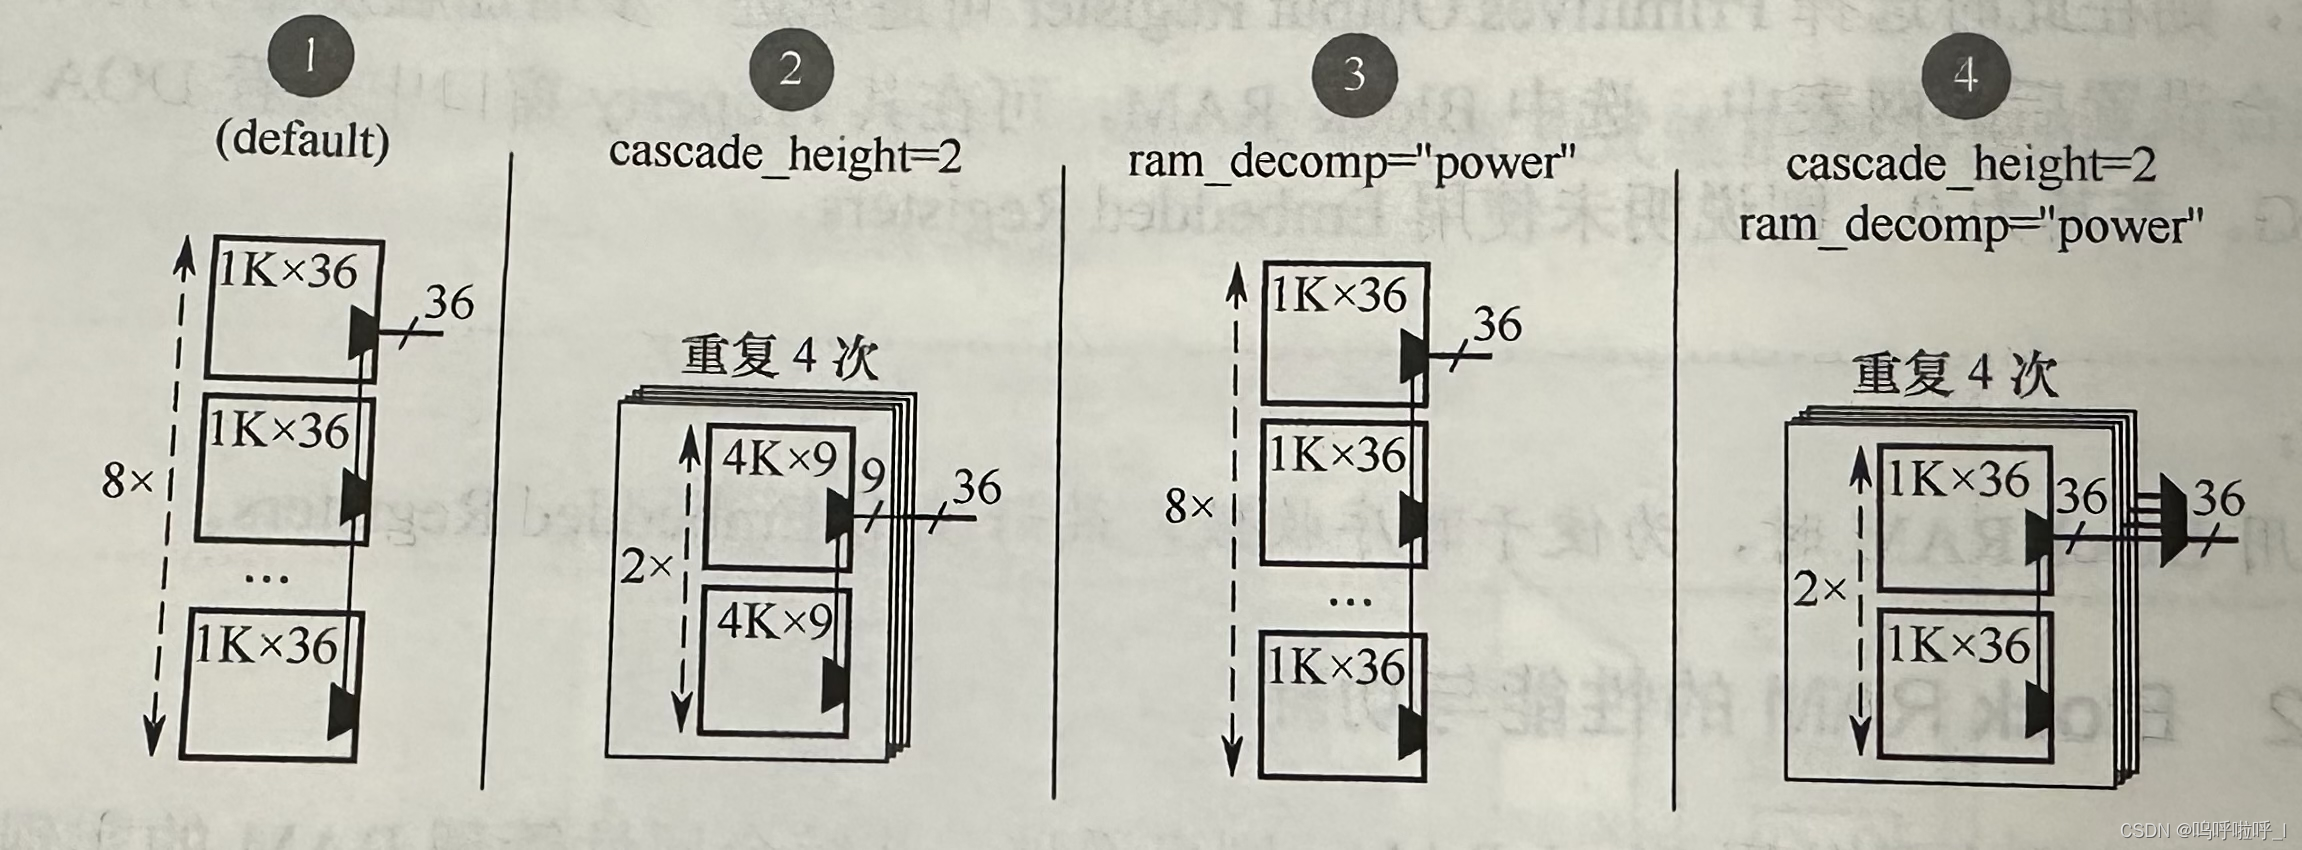 Xinlinx FPGA如何降低Block RAM的功耗